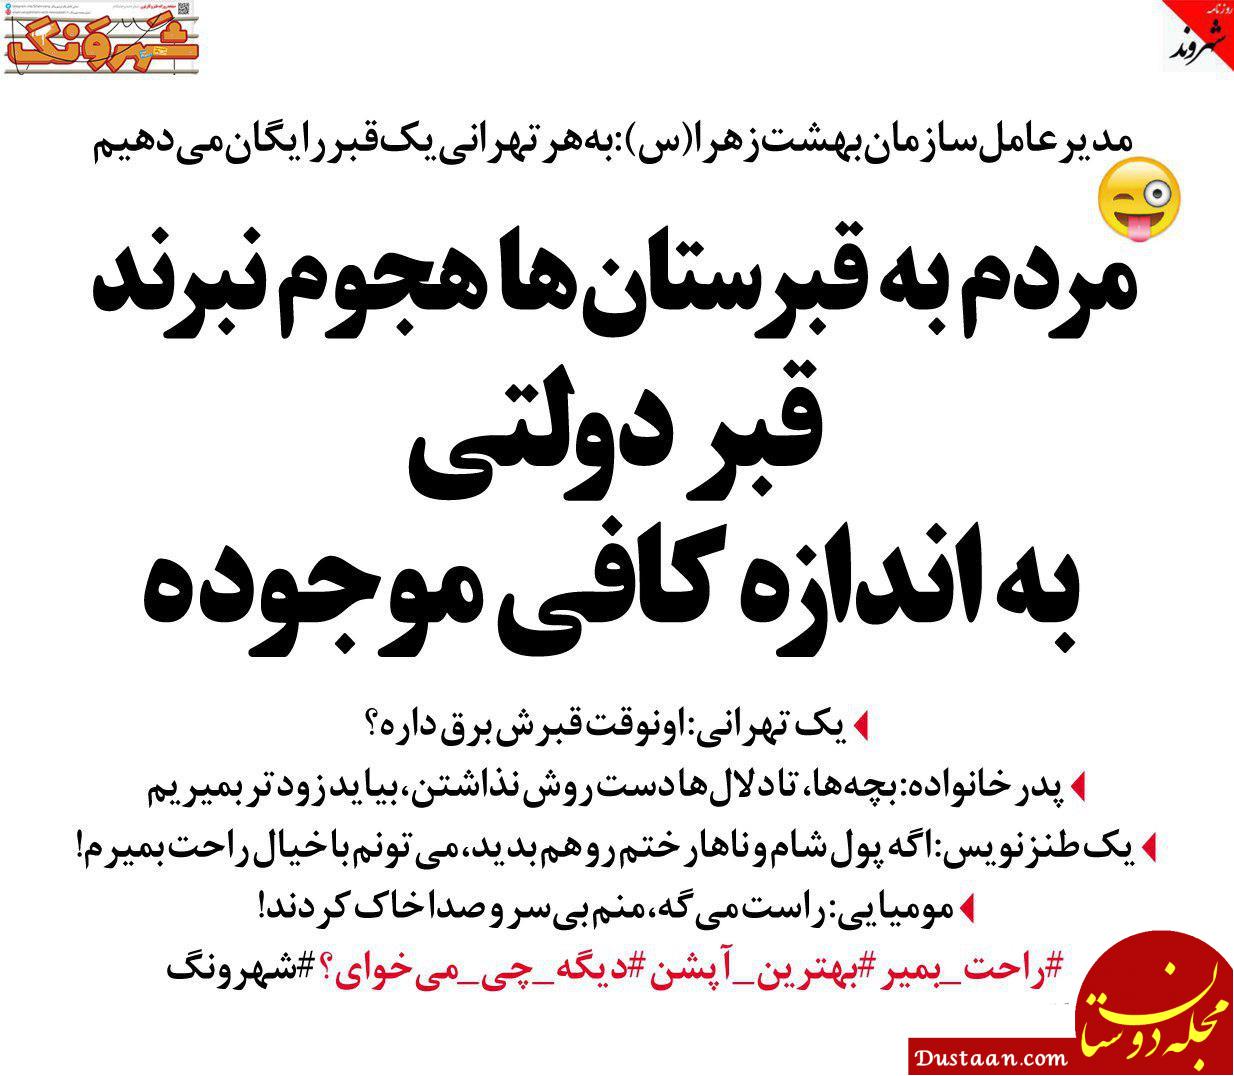 www.dustaan.com سامانه قبر دولتی هم راه افتاد!؟ +عکس